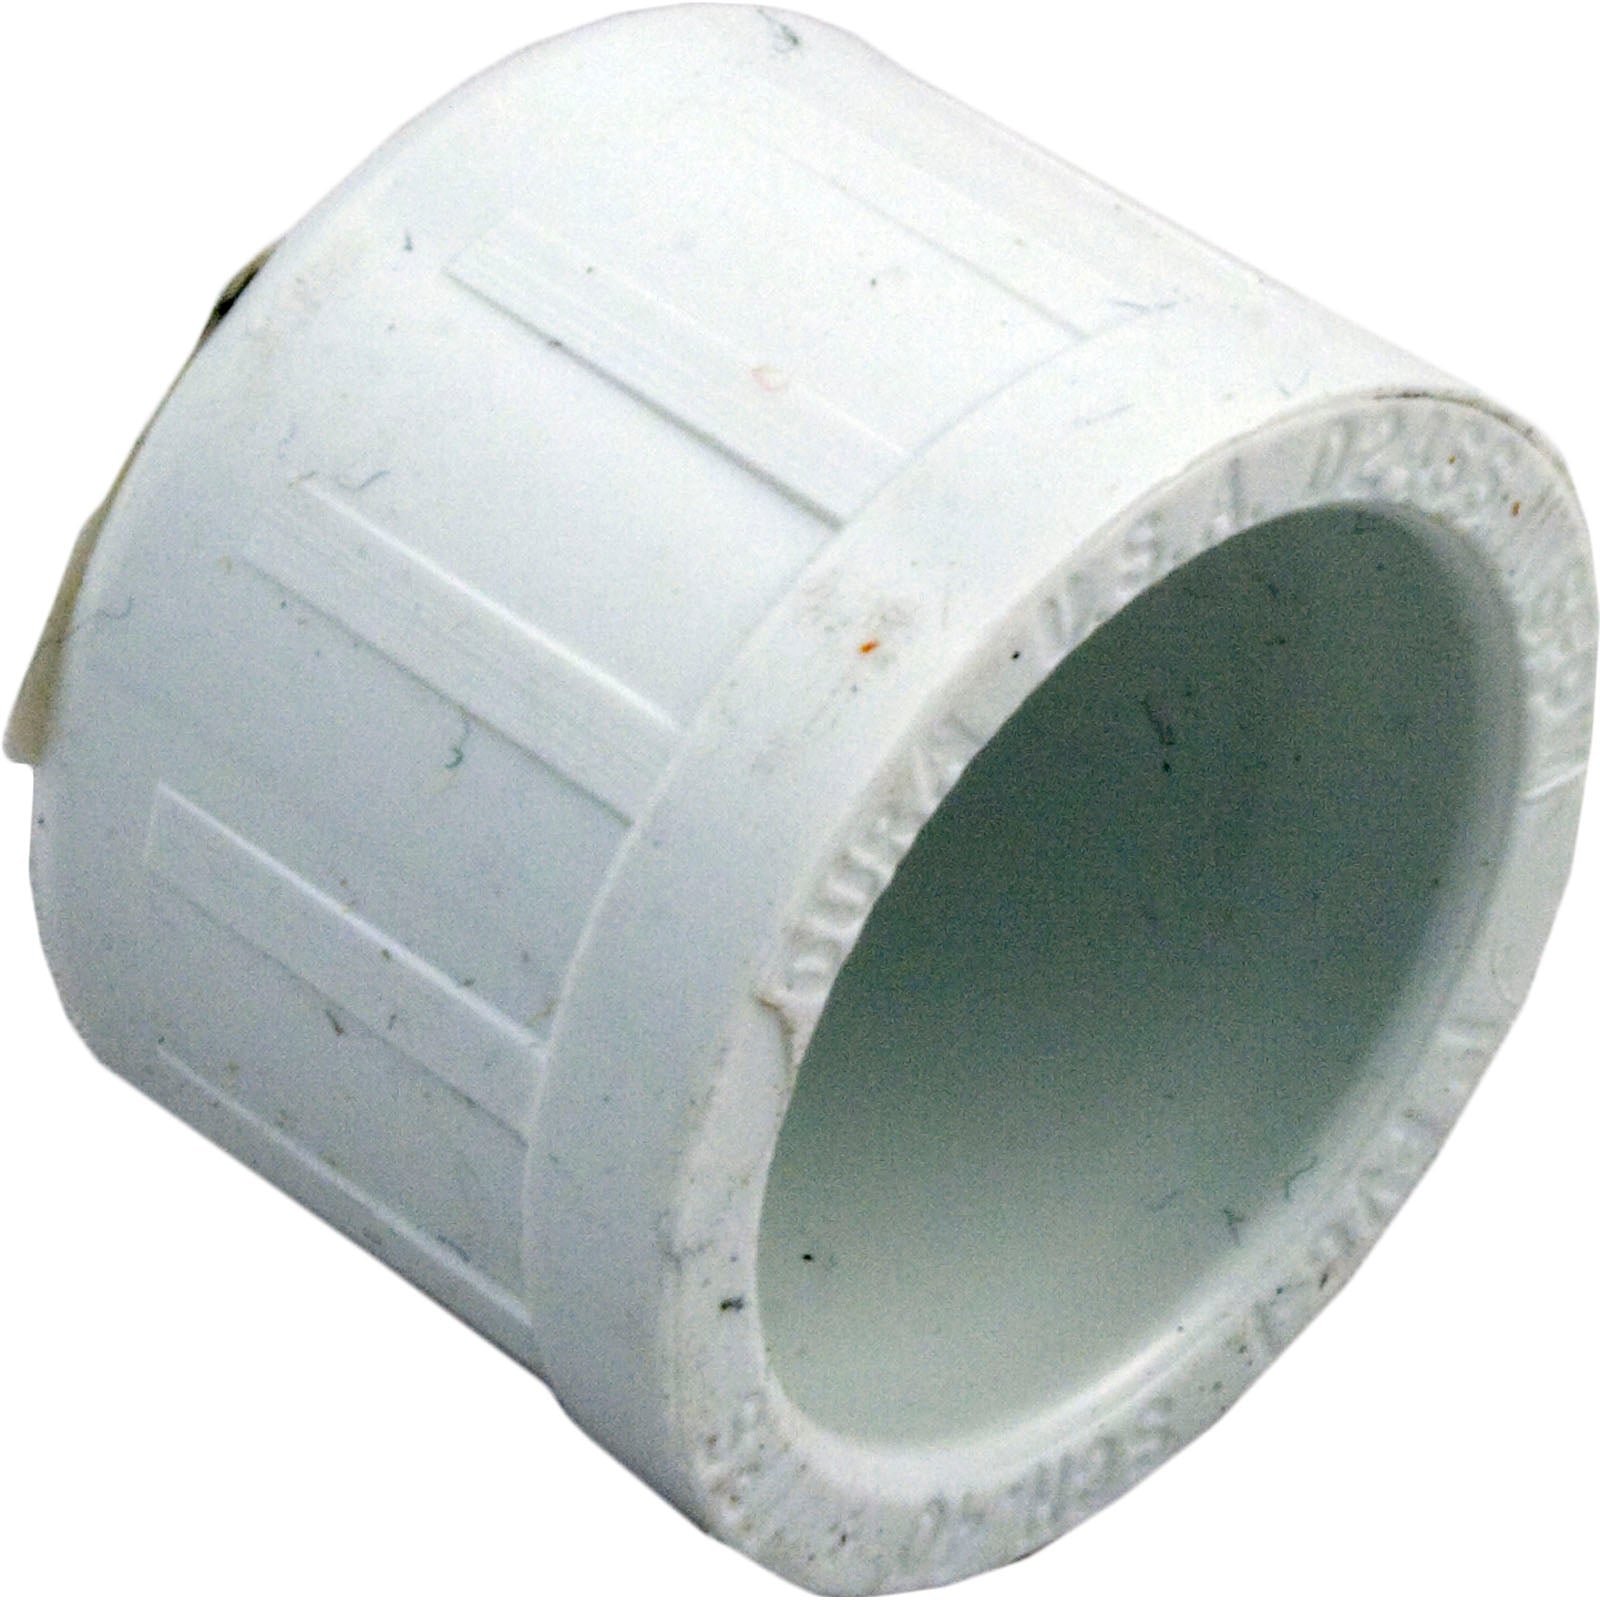 Lasco SCH40 PVC Cap [Slip]